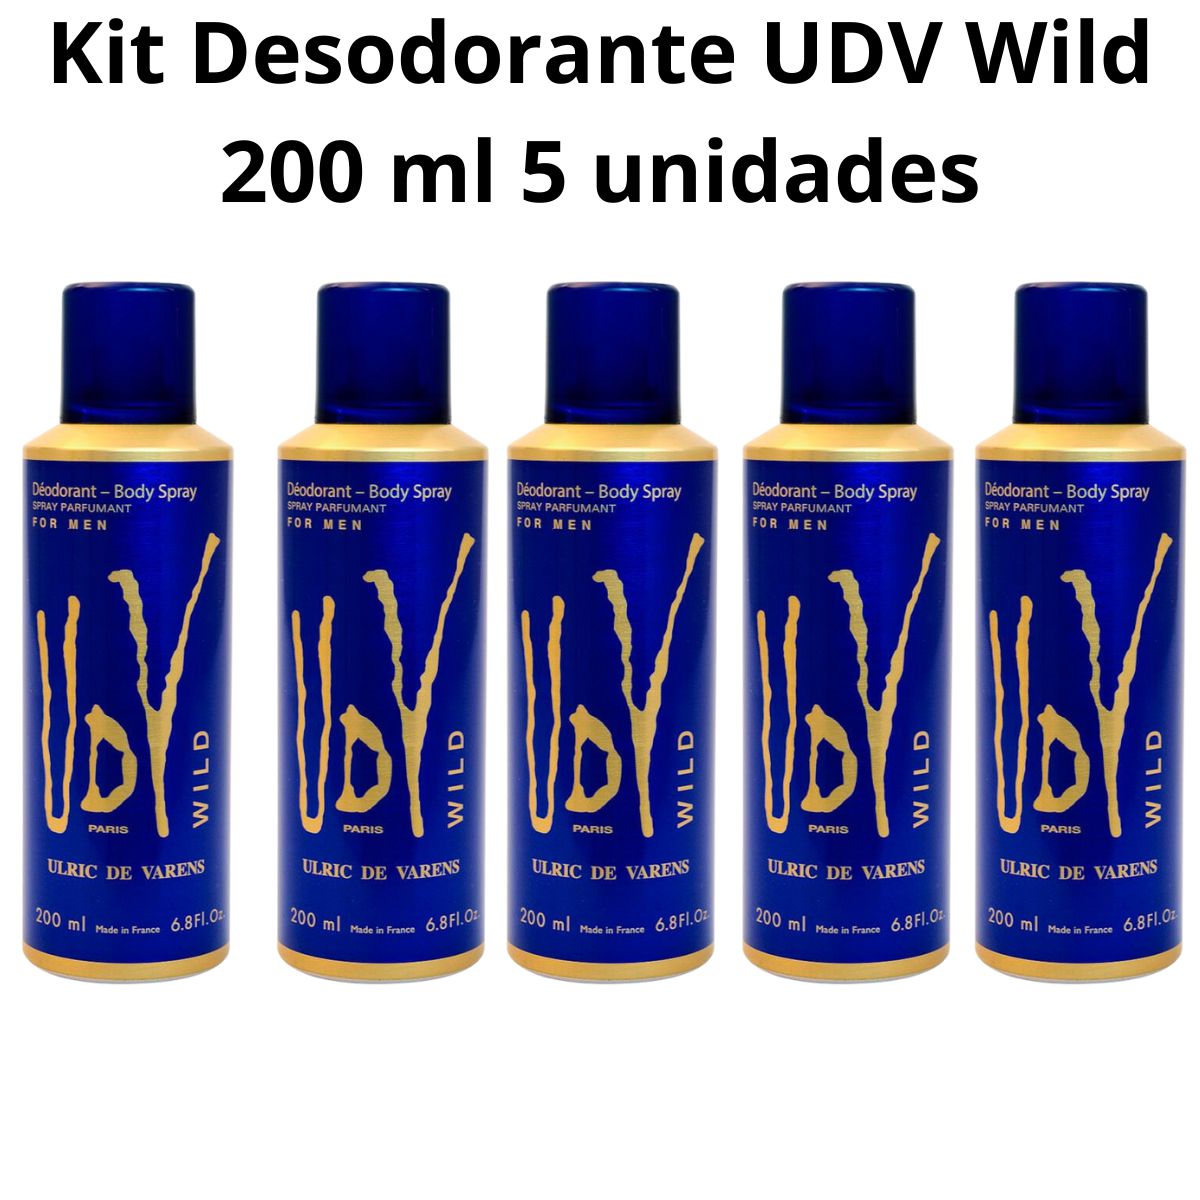 Kit Desodorante UDV Wild Masculino Ulric De Varens 200 ml 5 Unidades